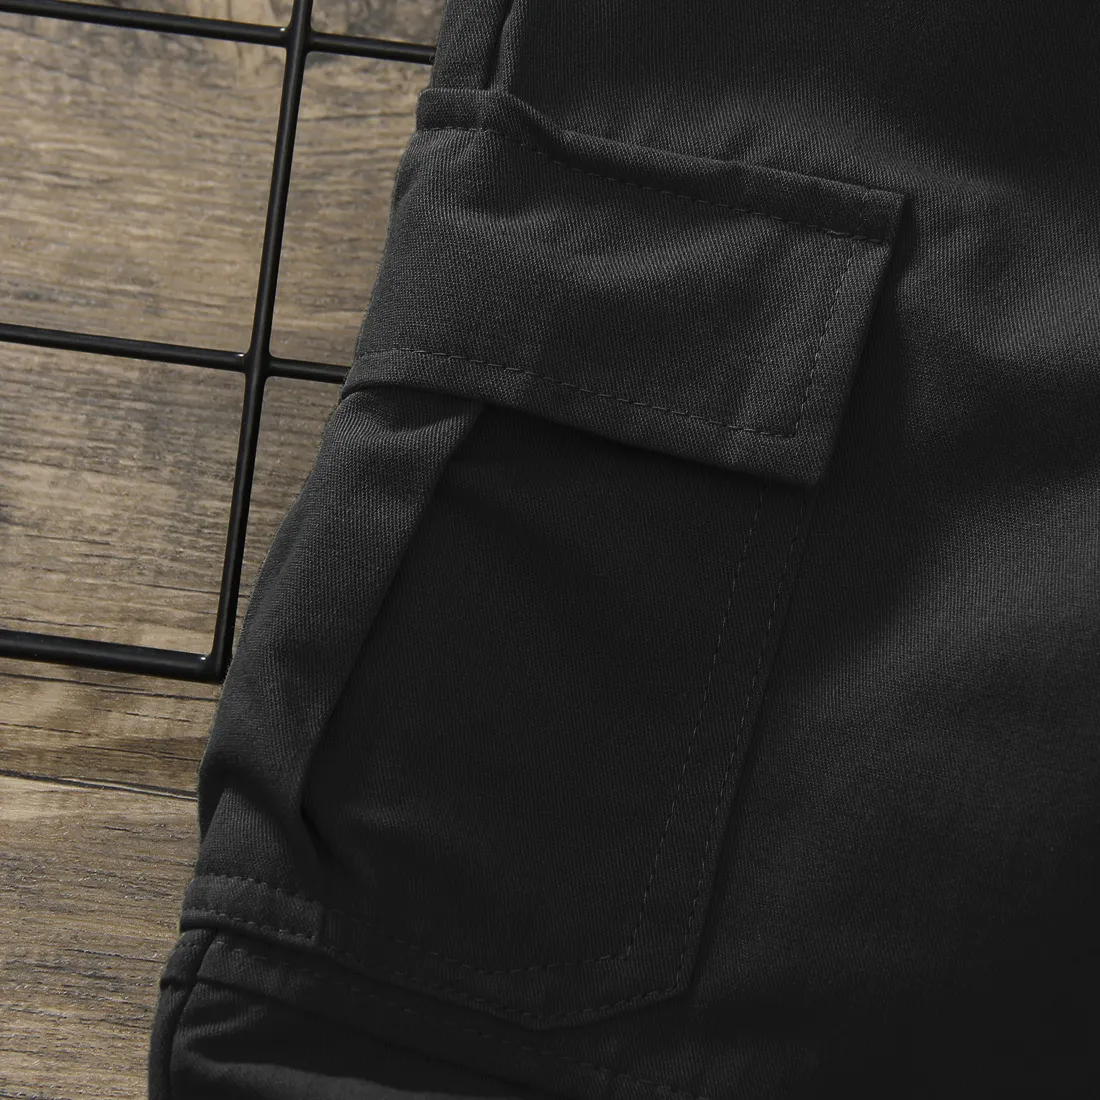 Toddler Boy Trendy Pocket Design Khaki Pants Black big image 1